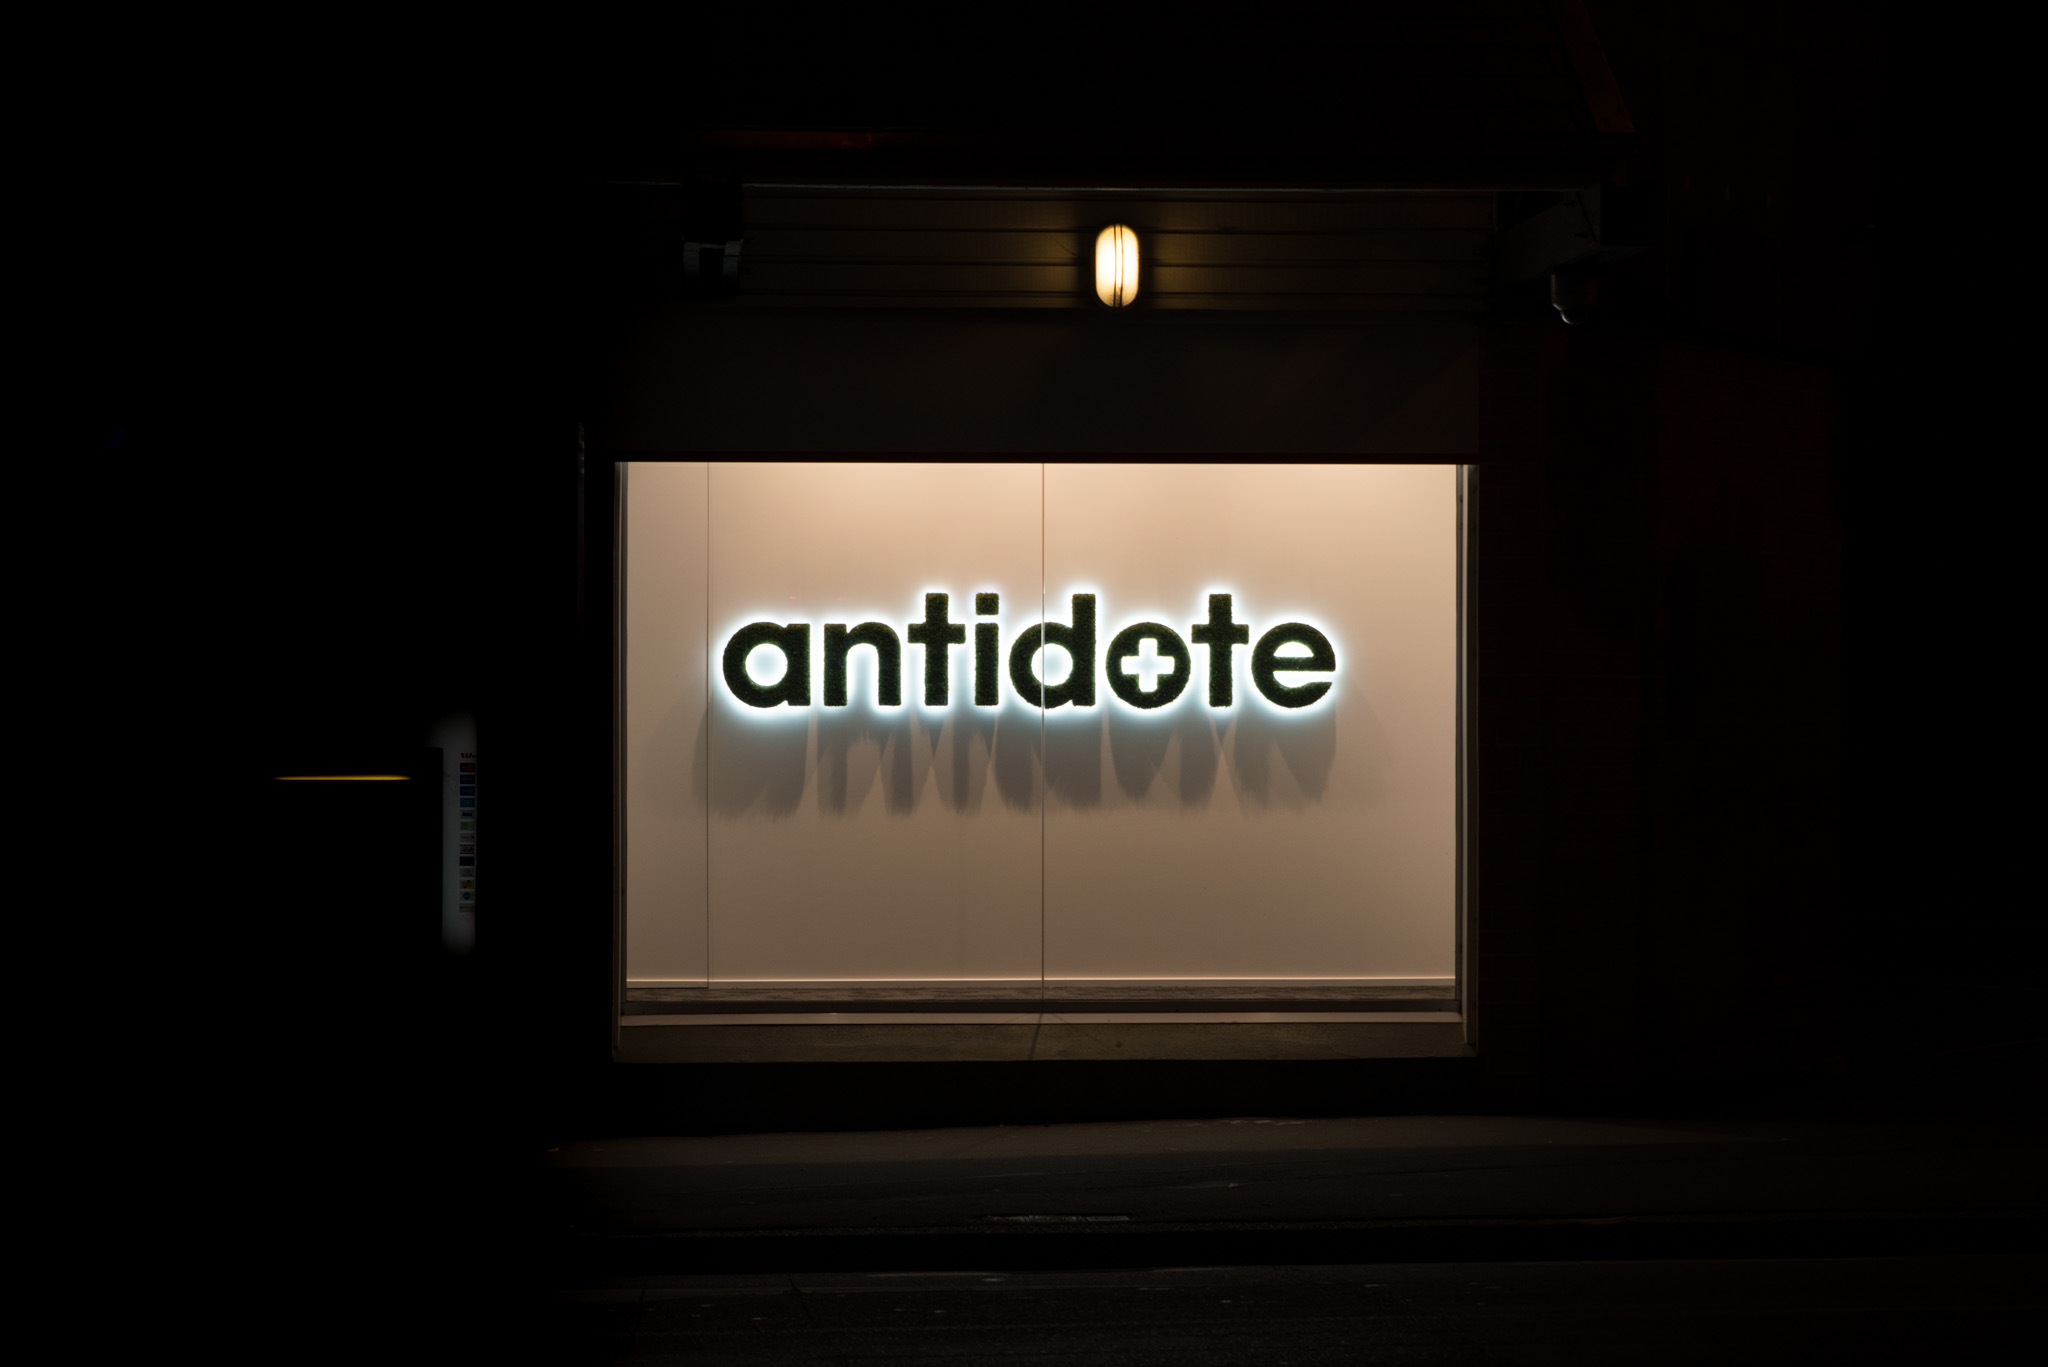 Gardens Antidote illuminated sign NZSDA award winner night thumbnail